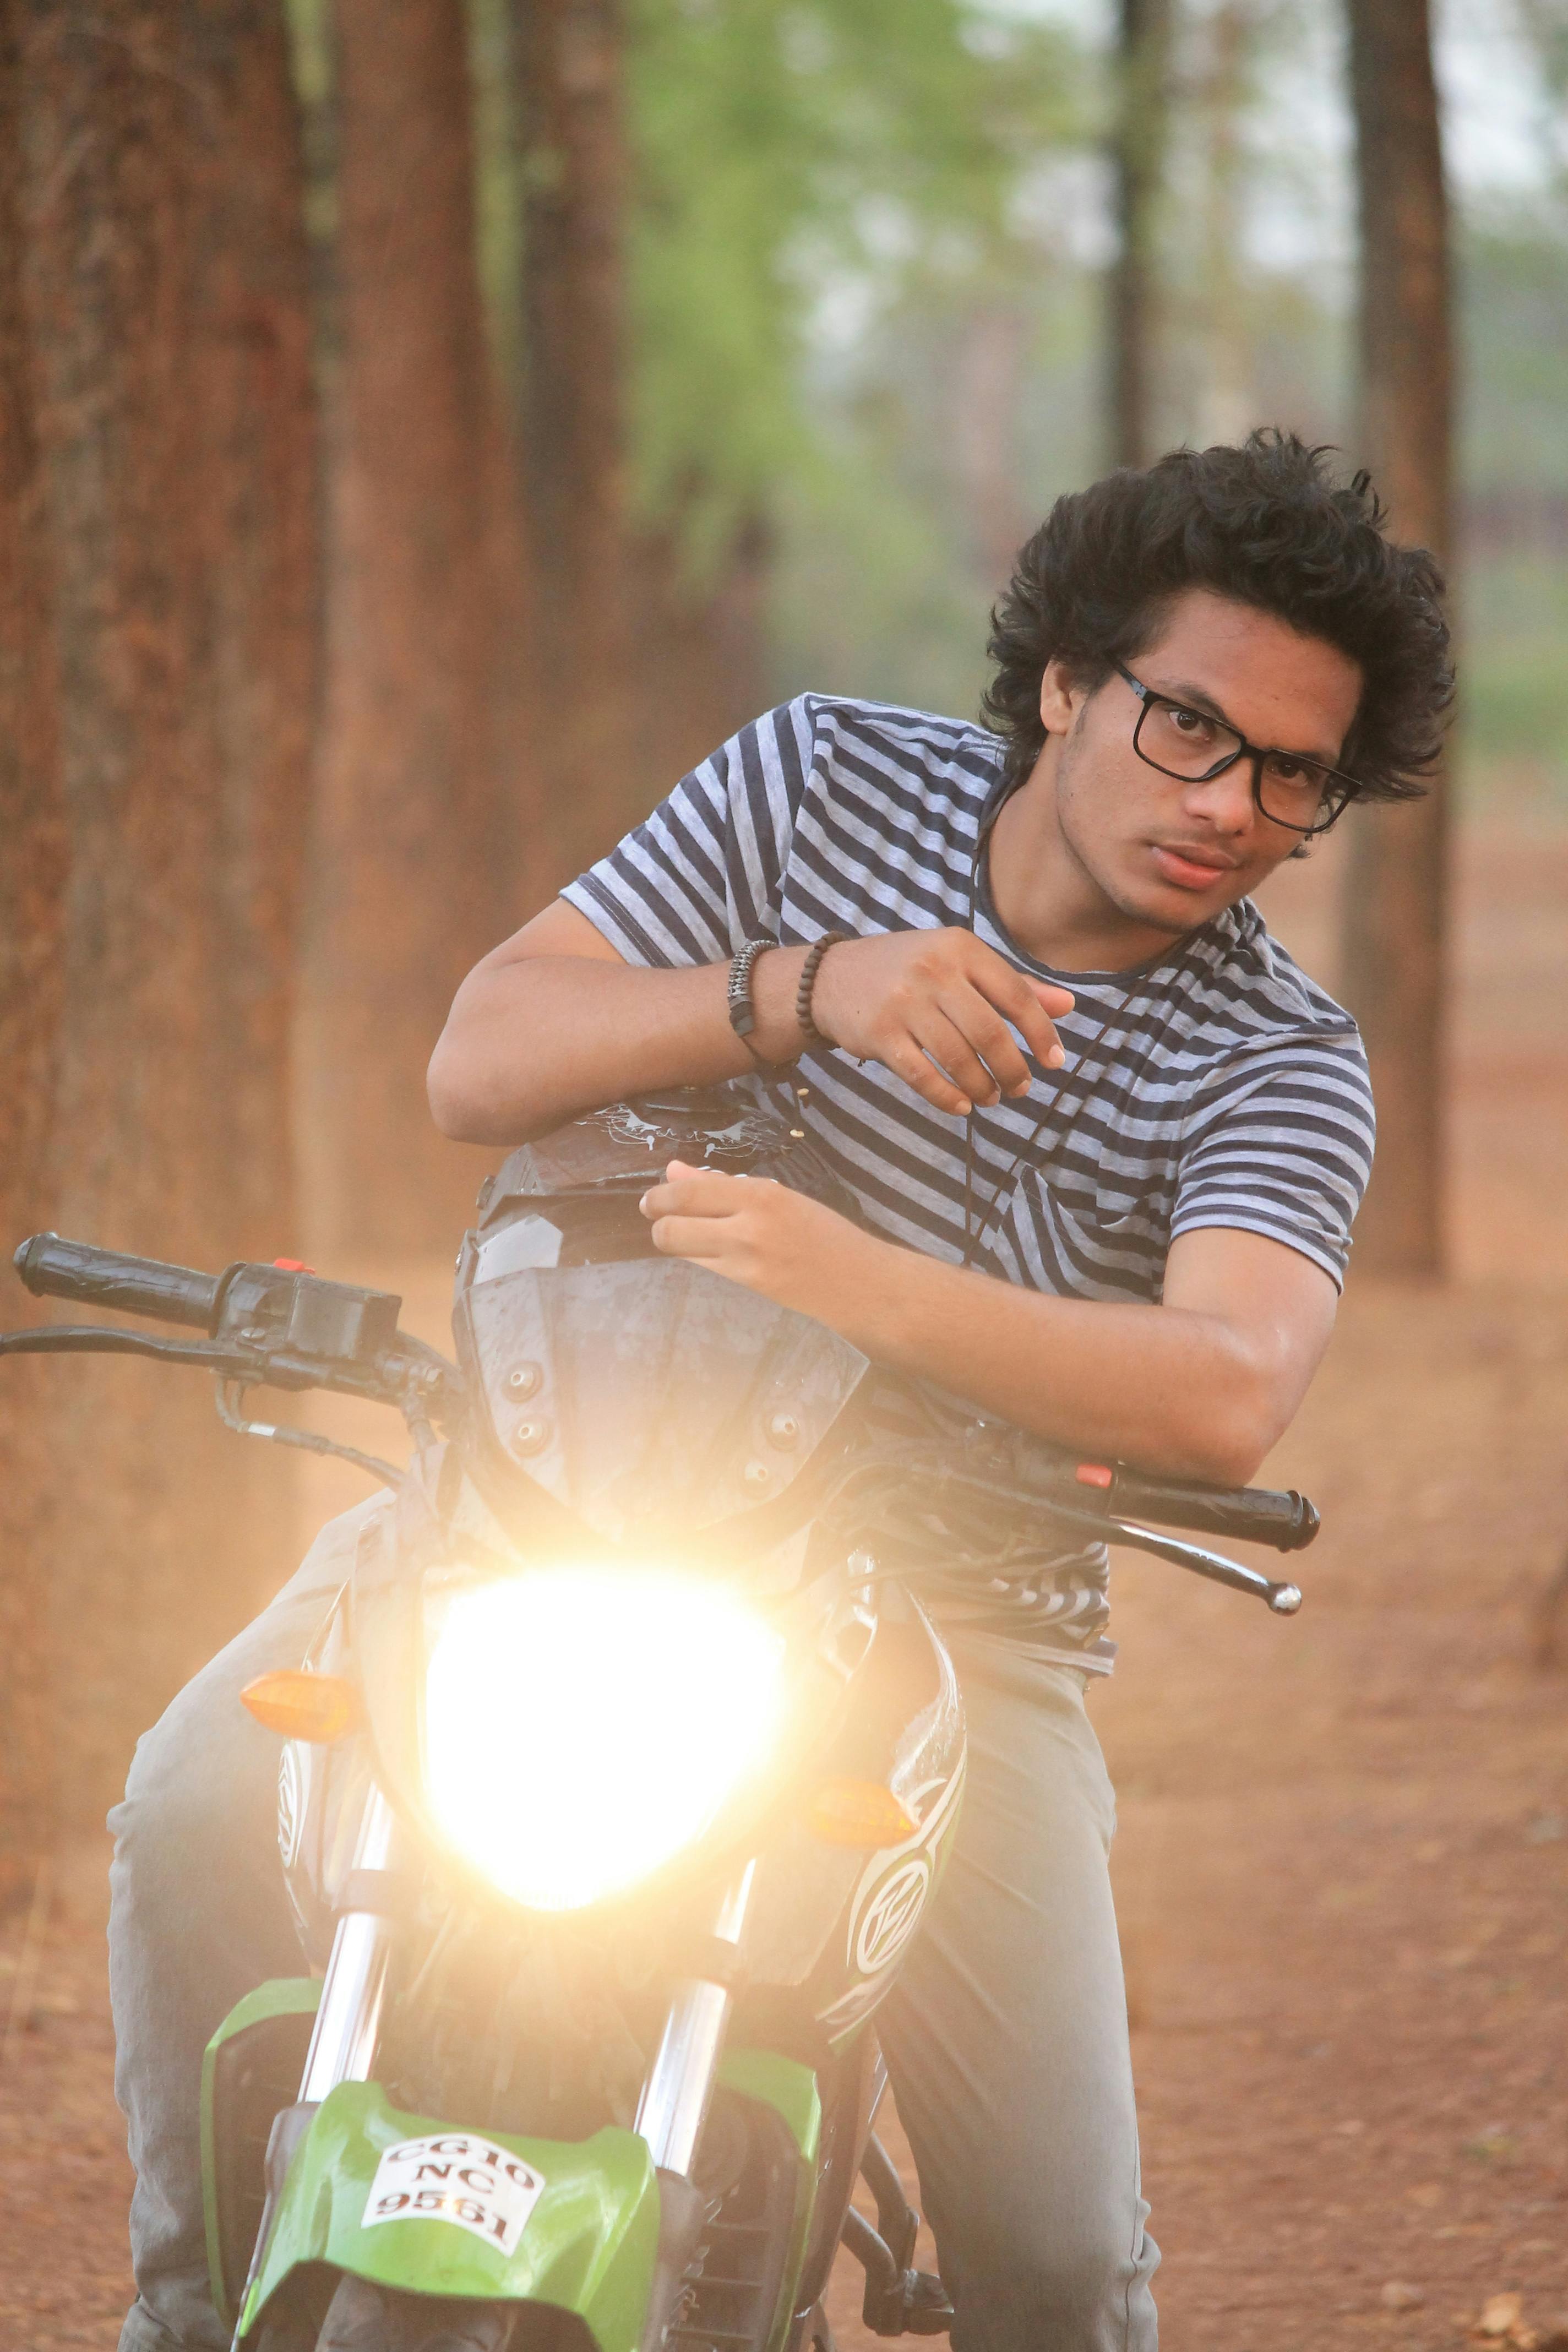 Photography | Photoshoot pose boy, Photography poses for men, Boy bike